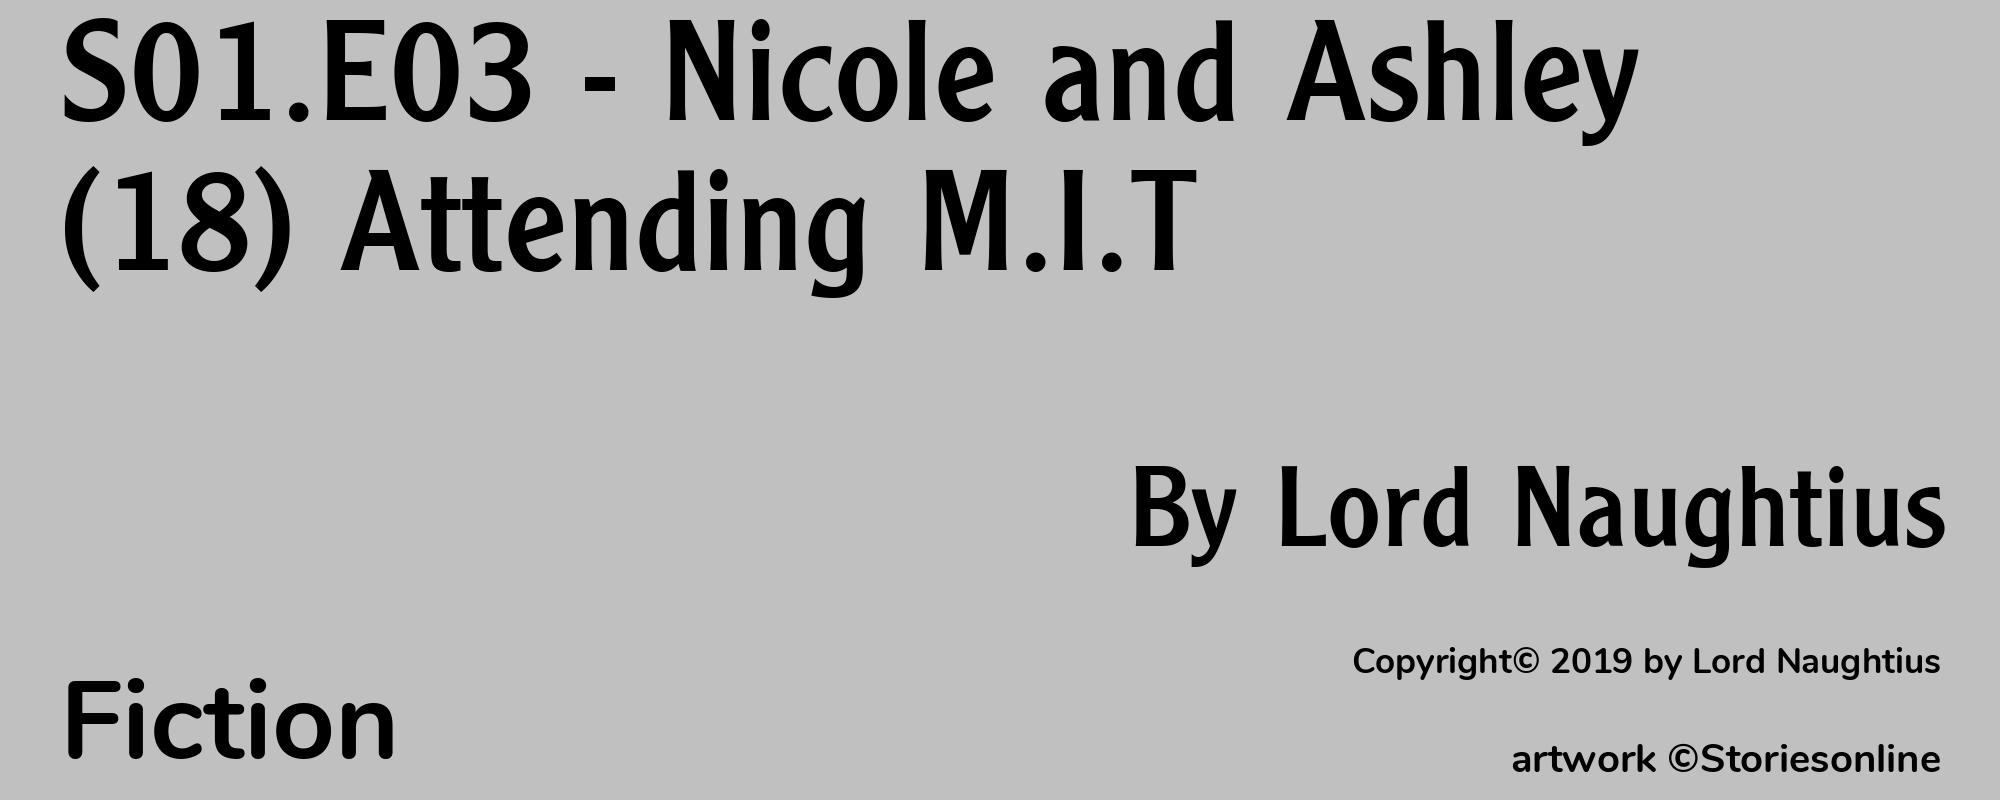 S01.E03 - Nicole and Ashley (18) Attending M.I.T - Cover